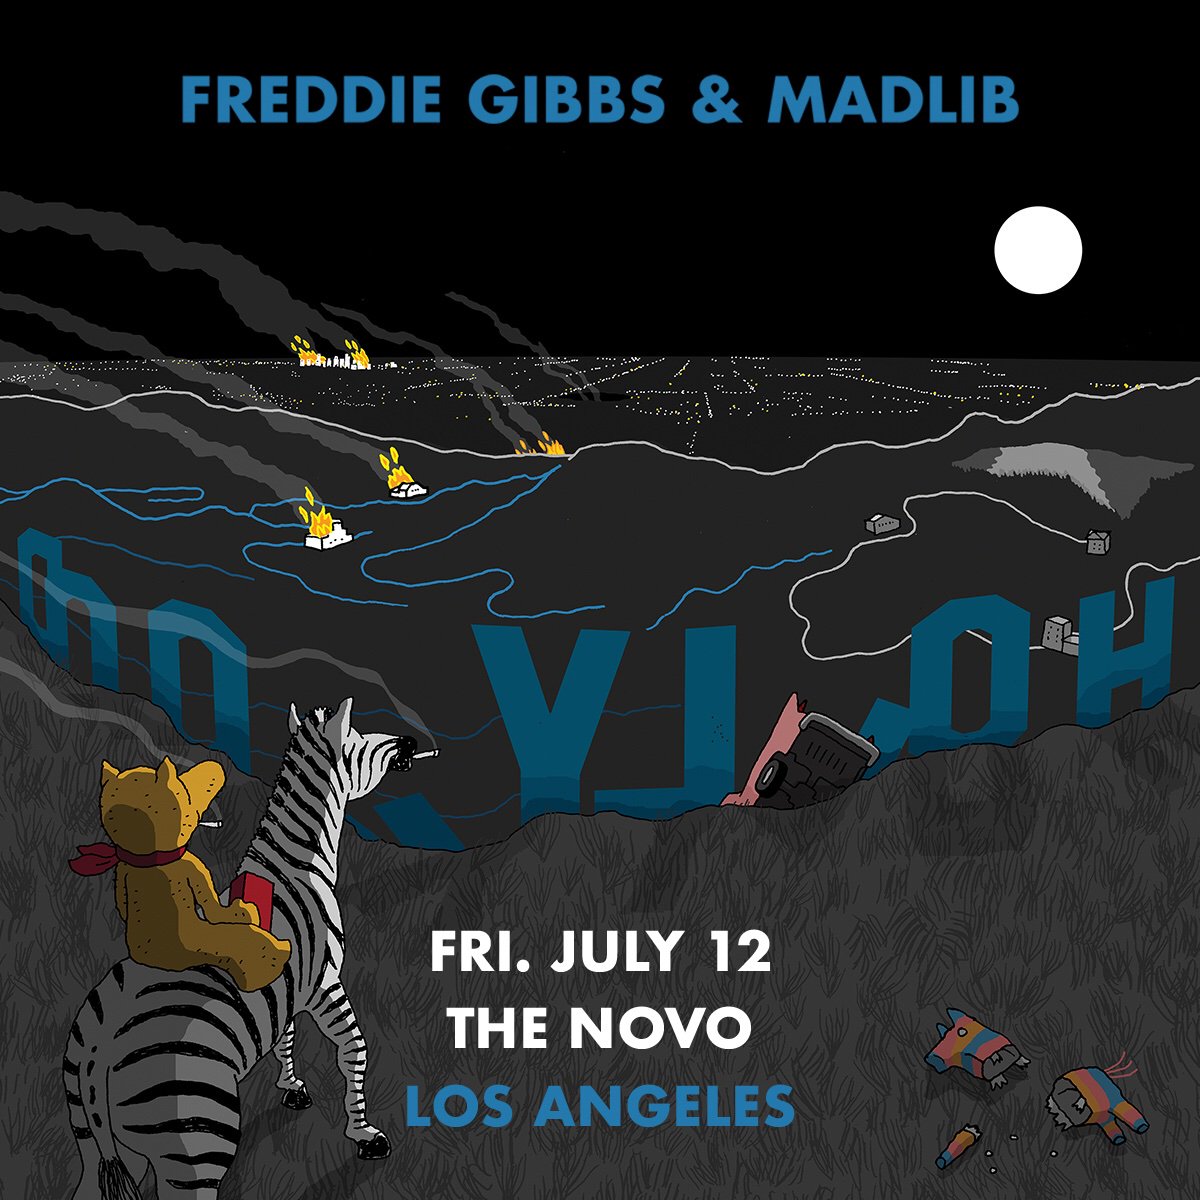 Freddie Gibbs & Madlib Takeover The Novo Tomorrow in LA